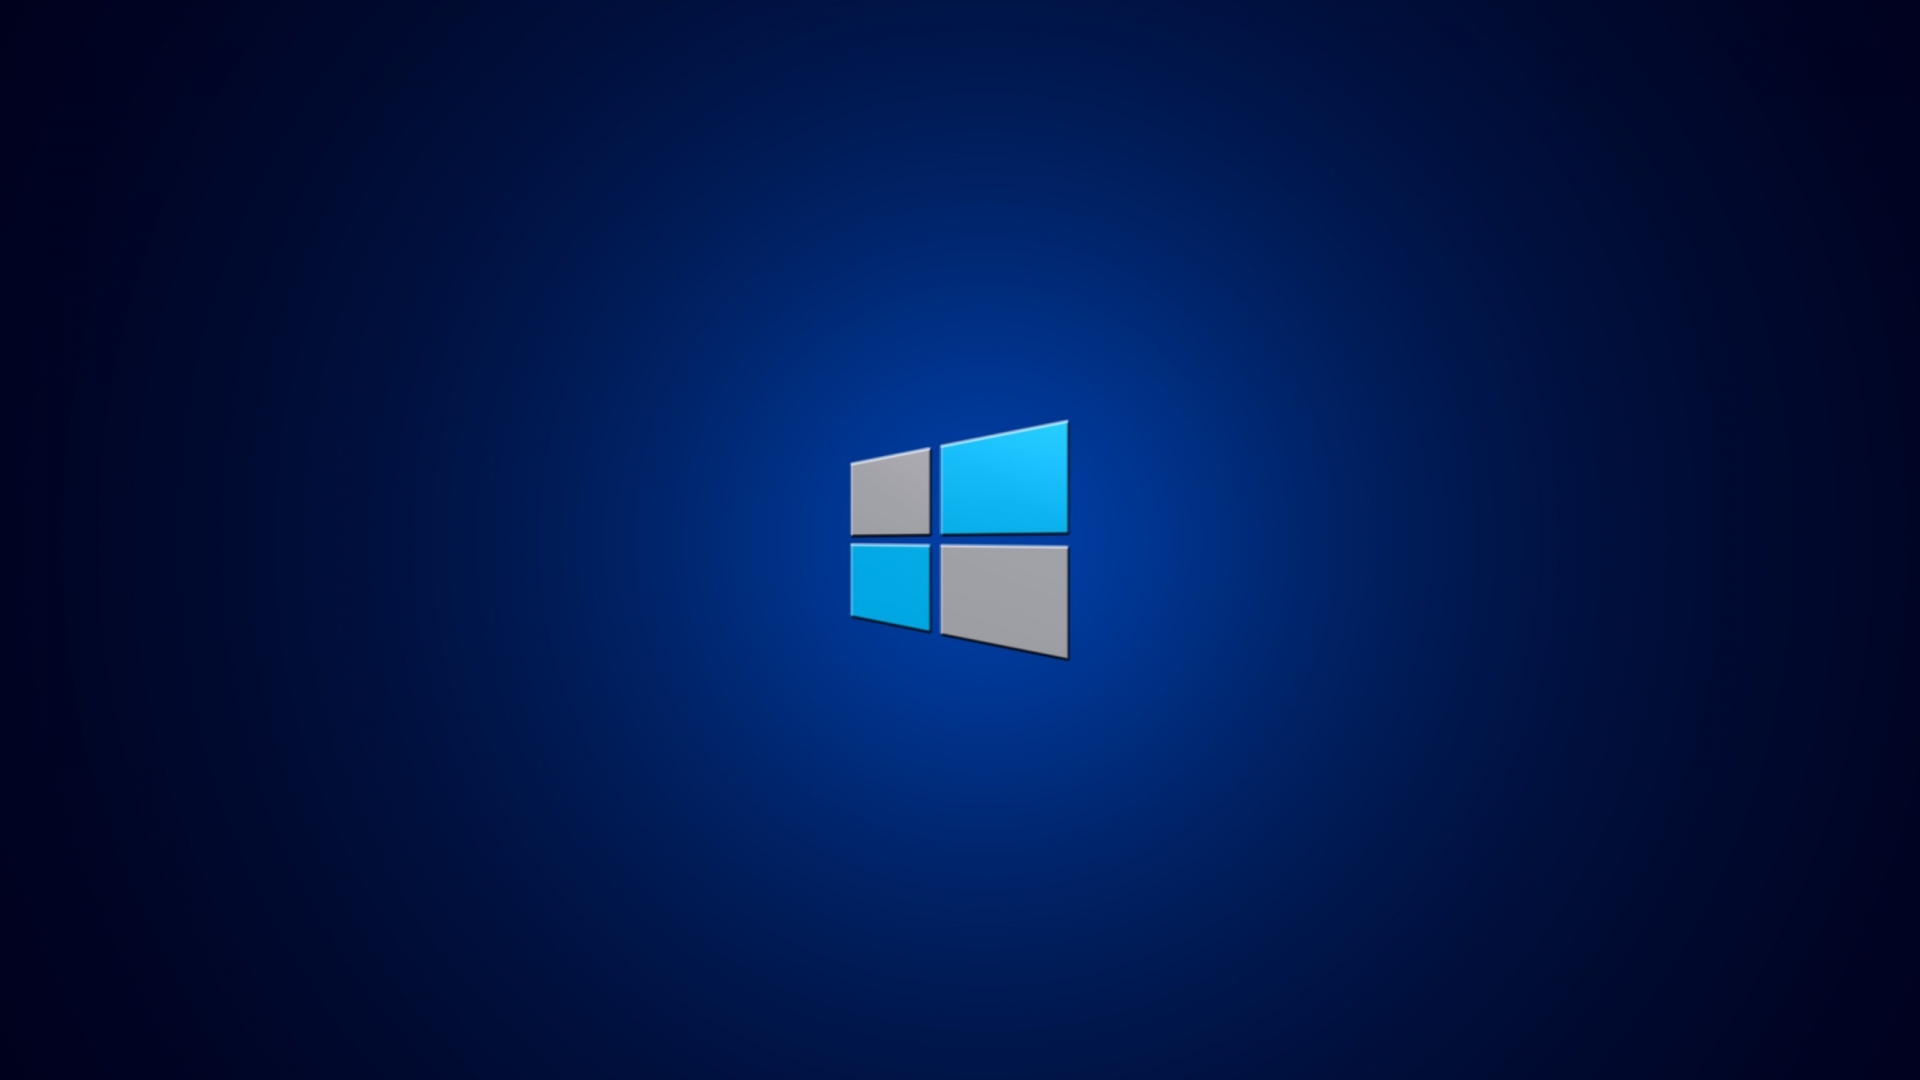  Widescreen HD Wallpapers For Windows Desktop Background